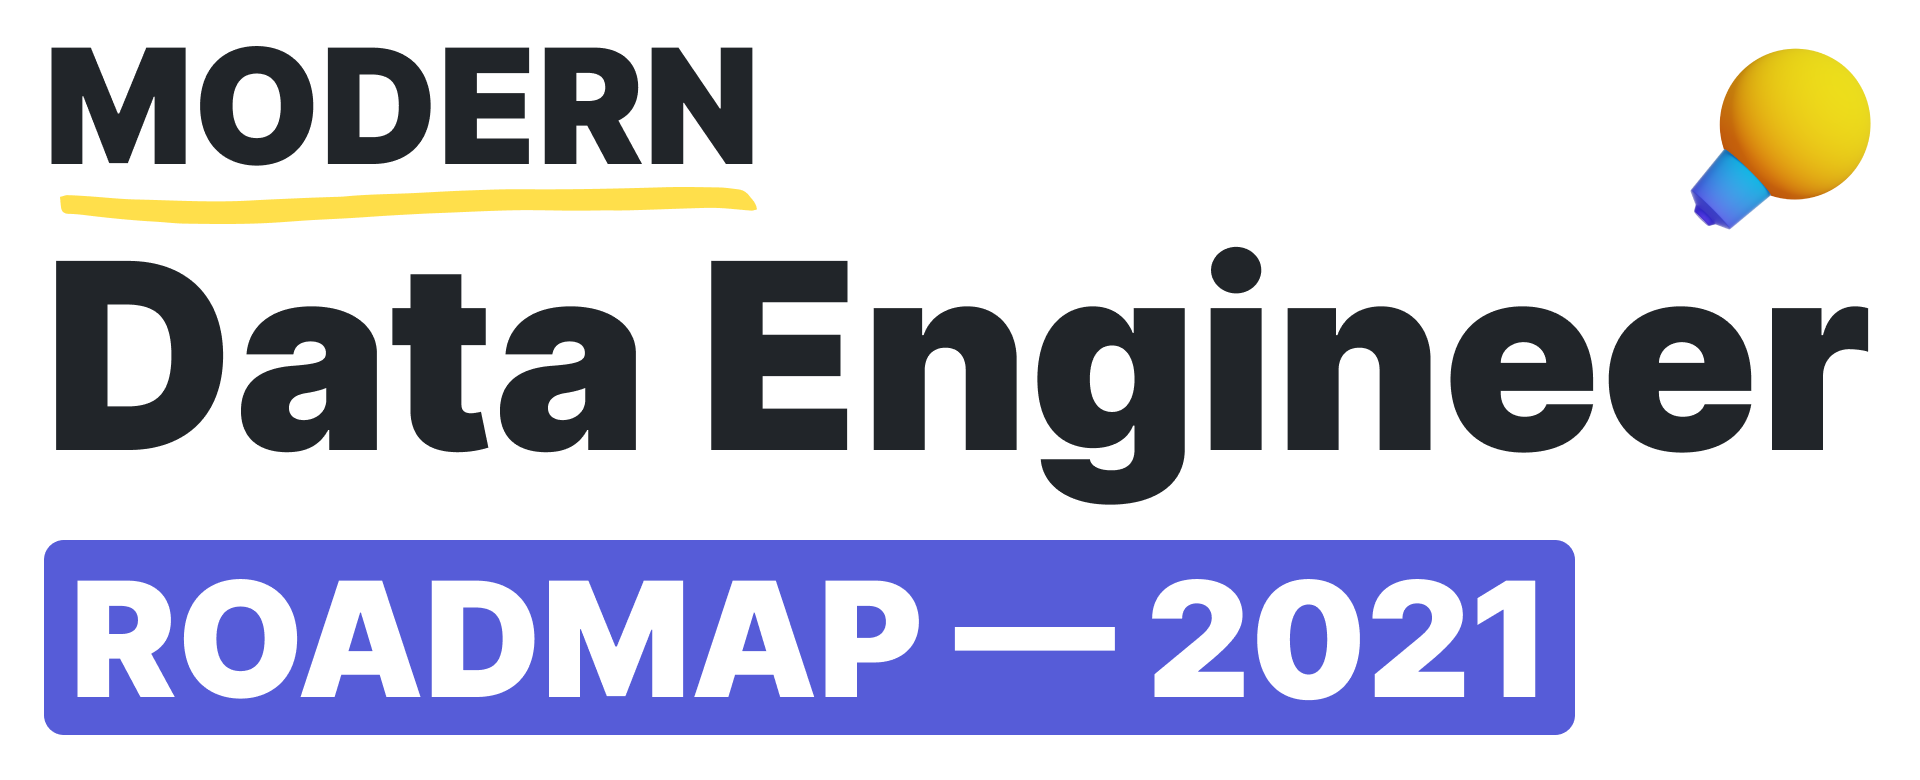 Modern Data Engineer Roadmap 2021